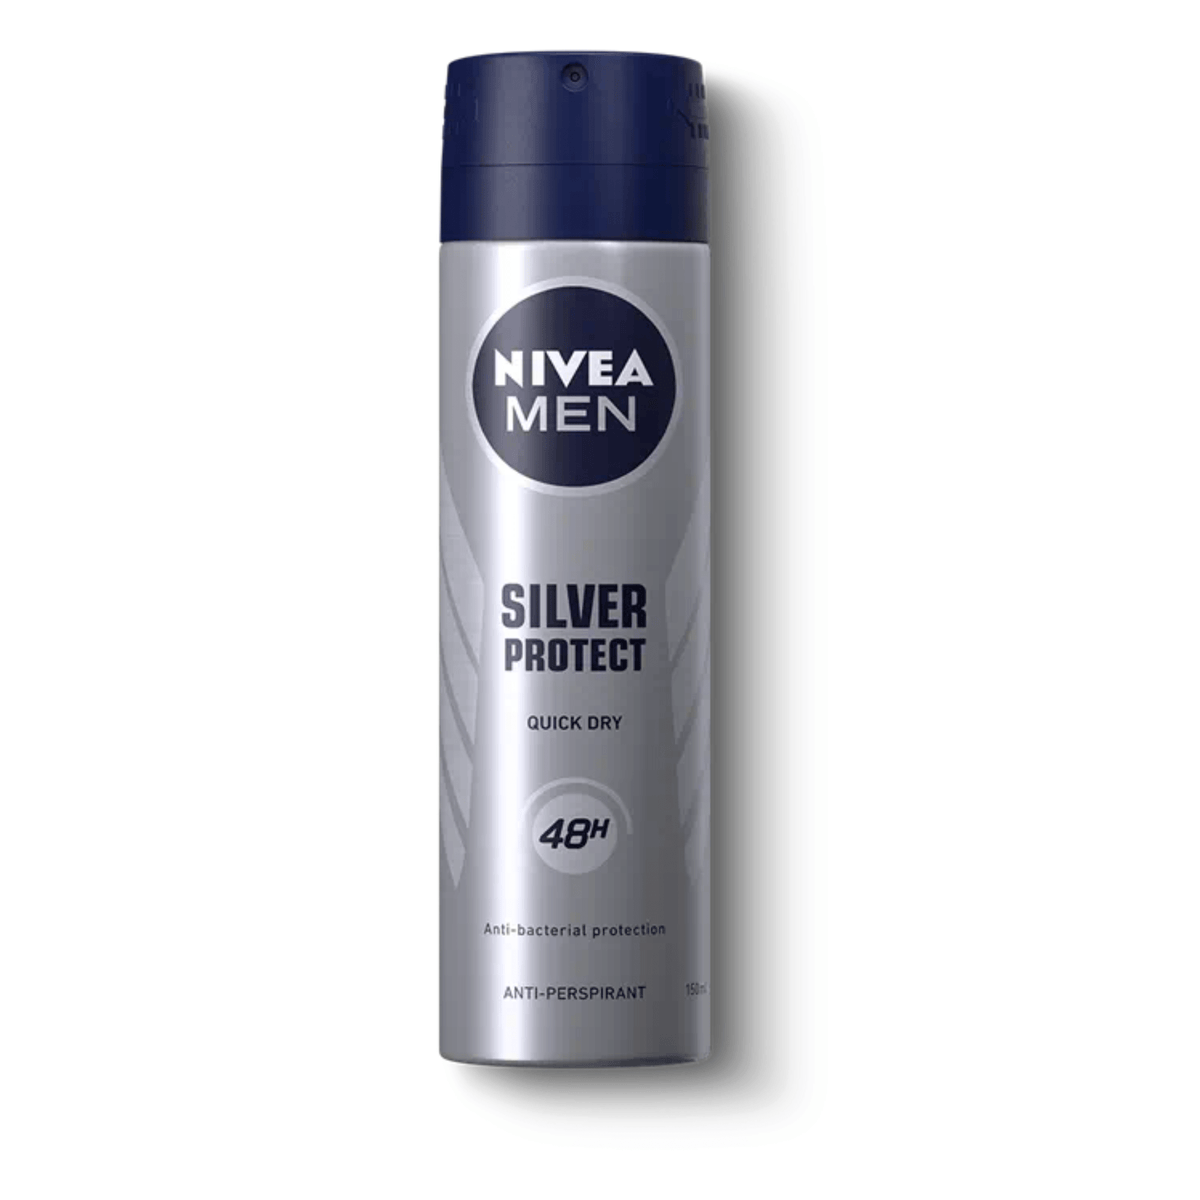 Primary Image of Silver Protect Anti-Perspirant Deodorant